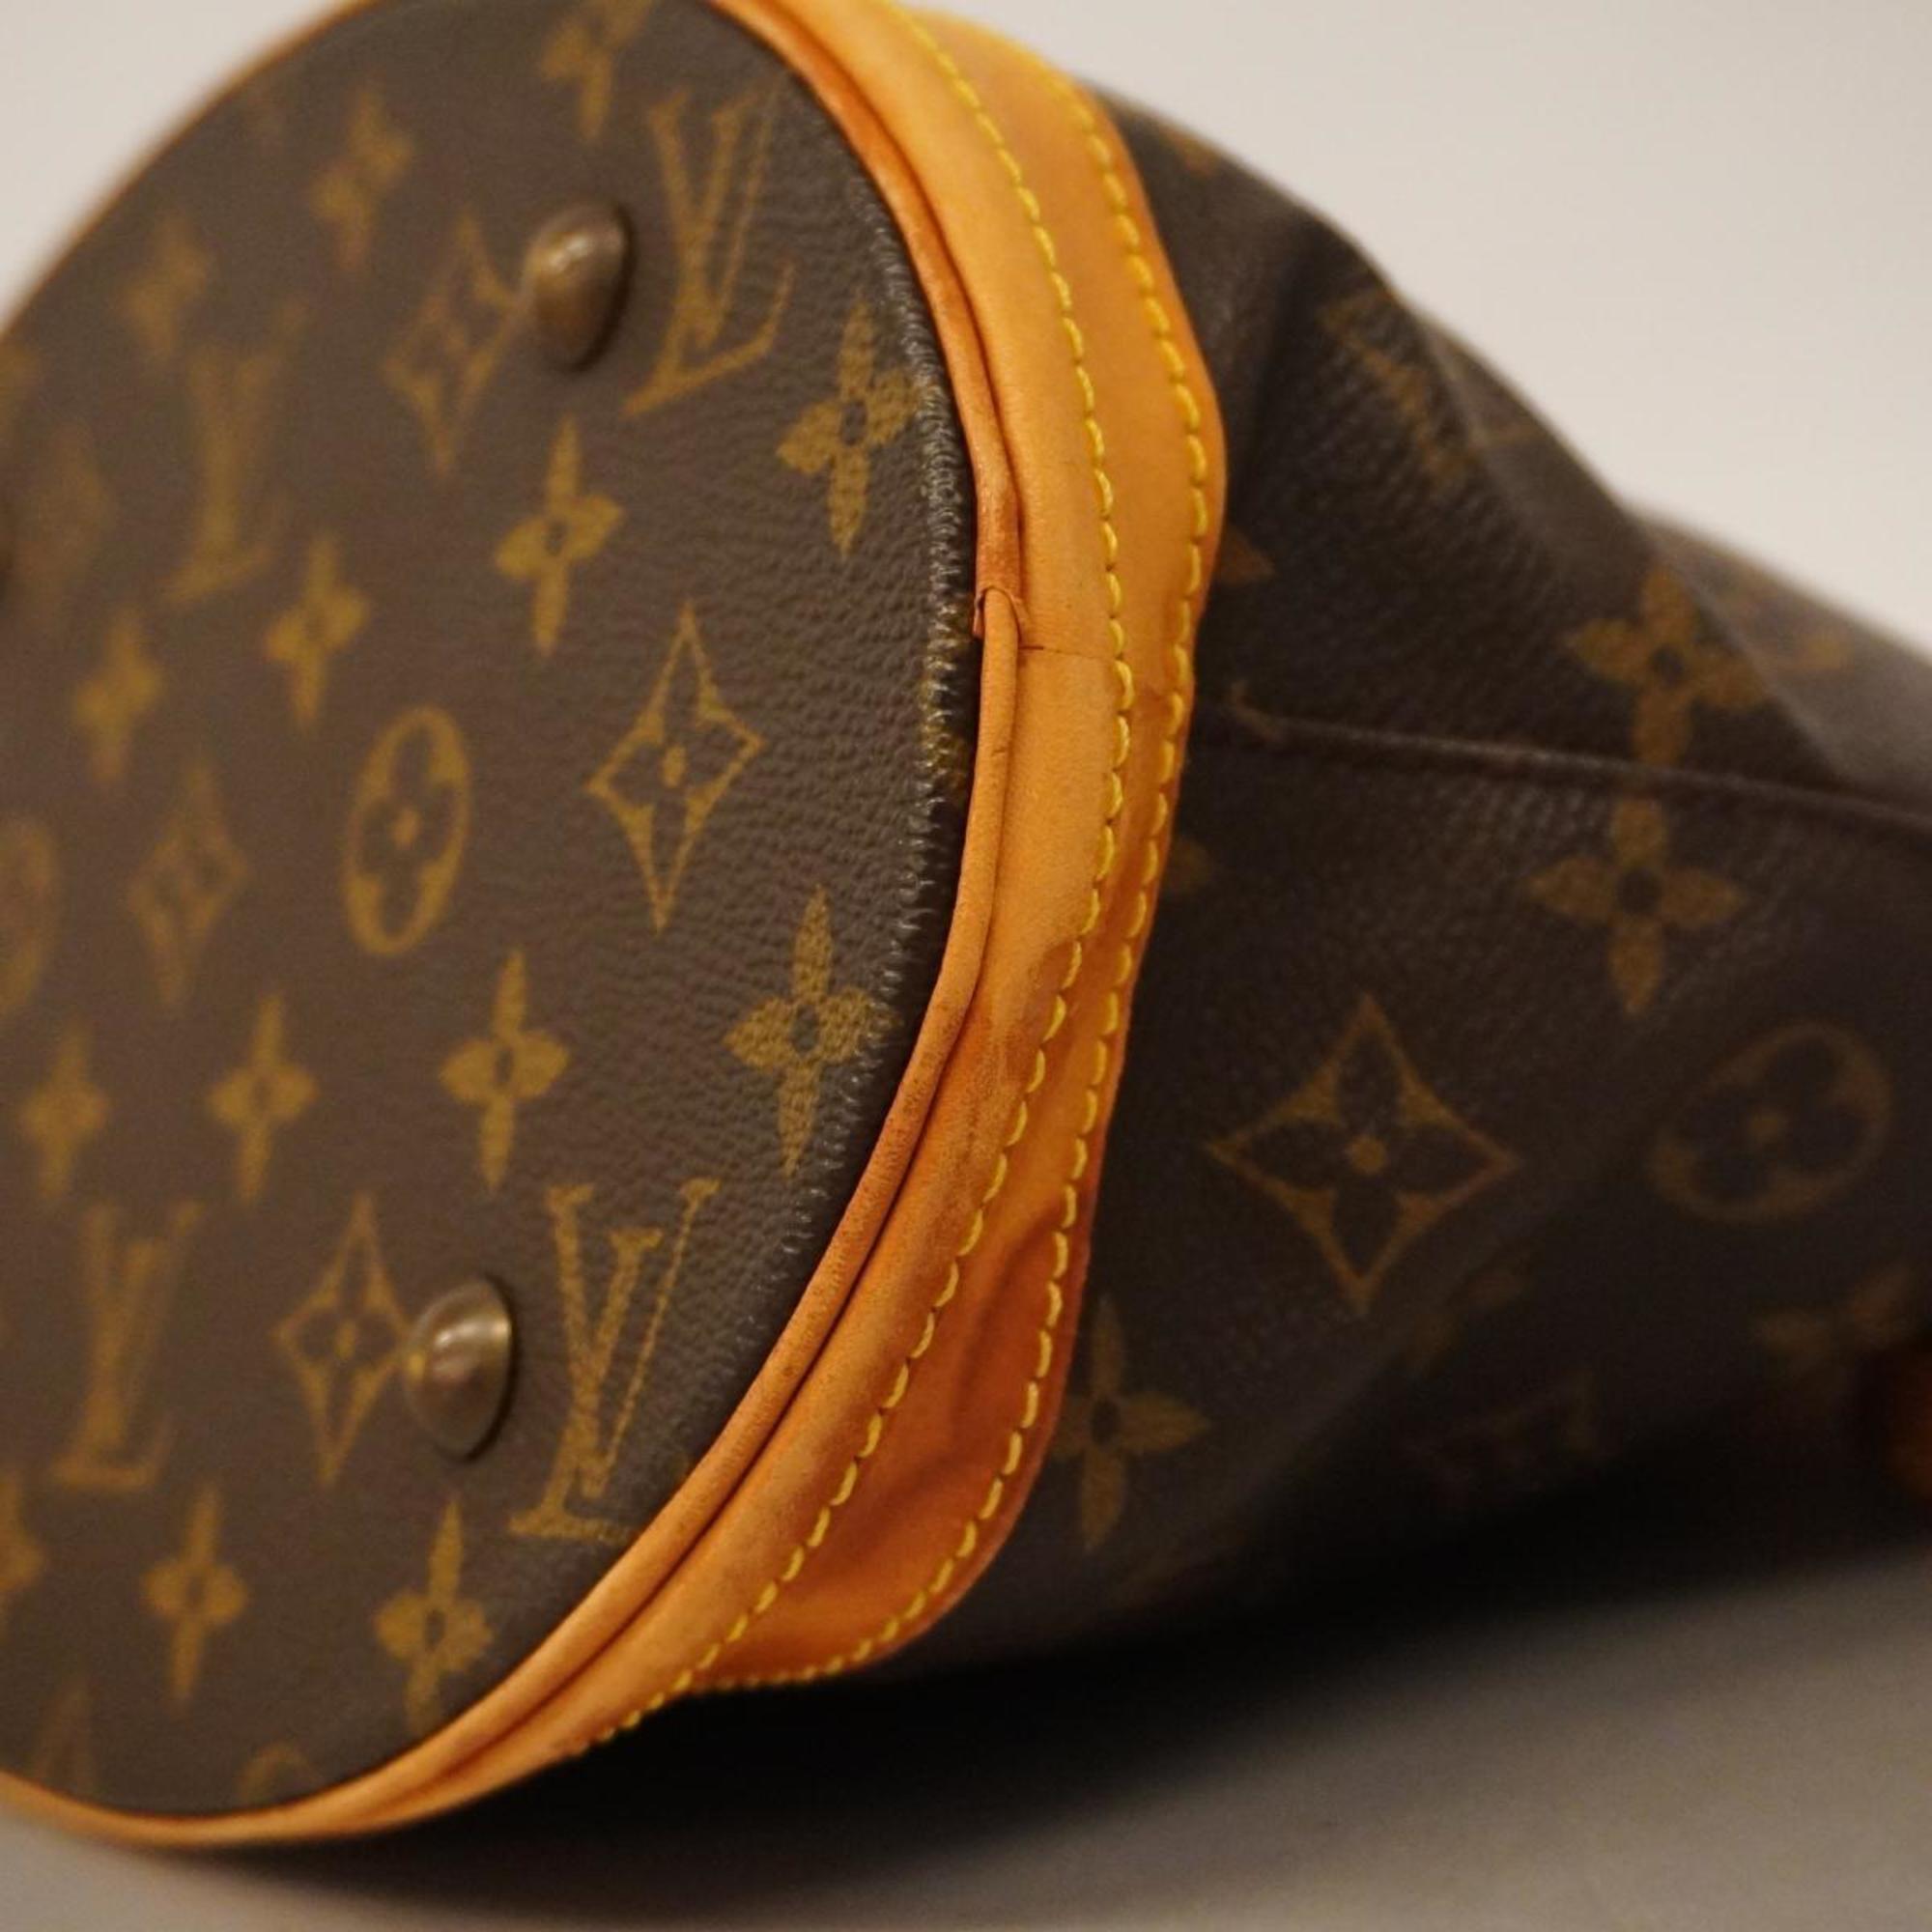 Louis Vuitton Tote Bag Monogram Bucket PM M42238 Brown Ladies